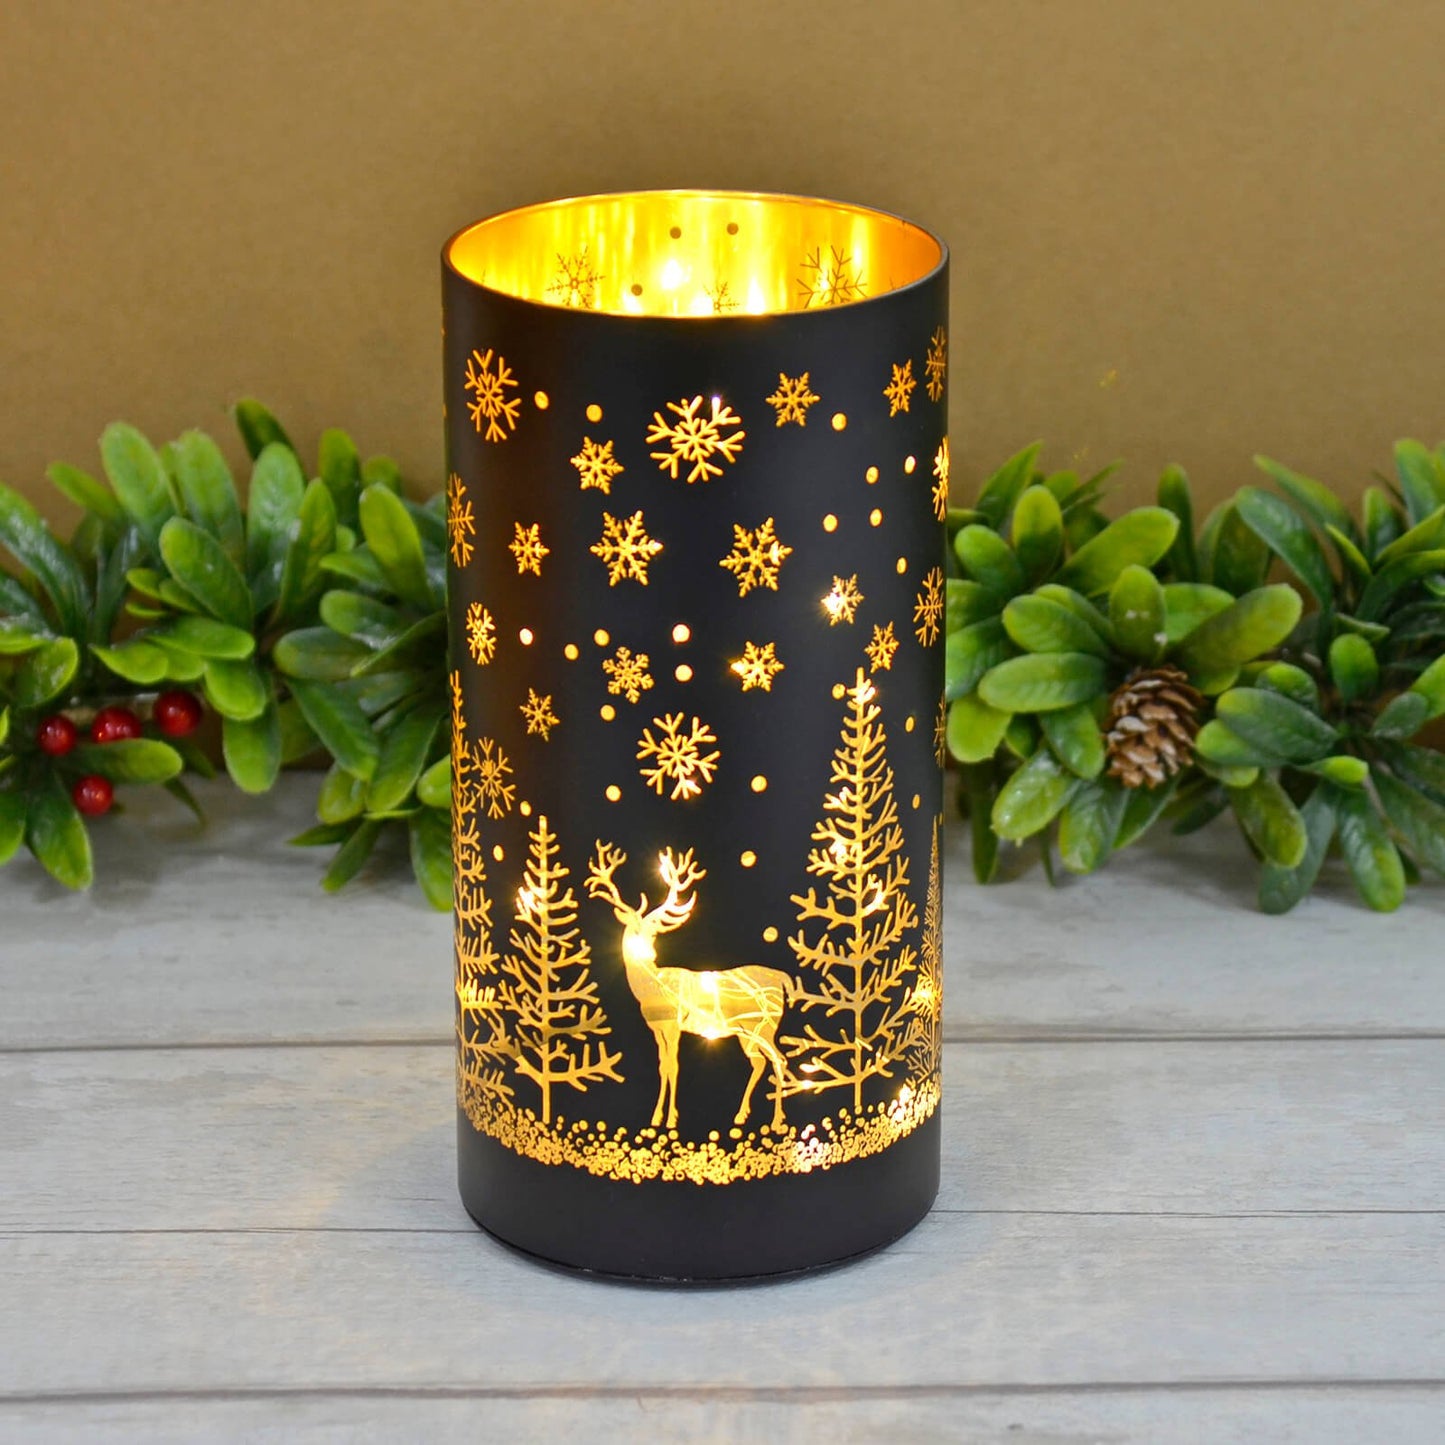 Mr Crimbo Christmas Cylinder Light Black Gold Decoration 20cm - MrCrimbo.co.uk -XS7293 - Tree Scene & Deer -Black